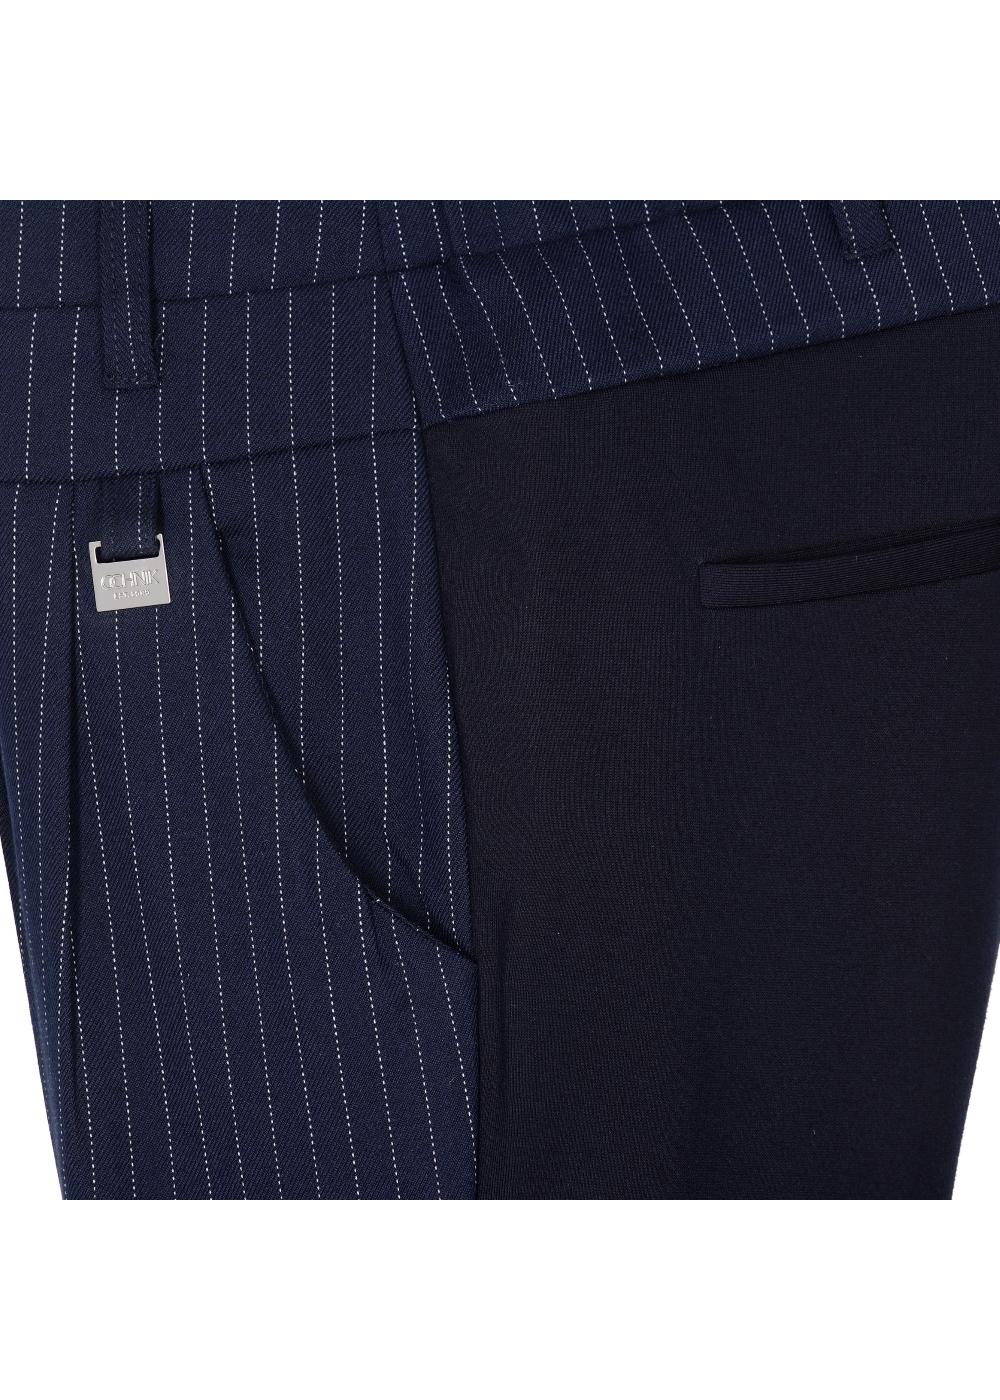 Spodnie damskie SPODT-0025-69(Z18)